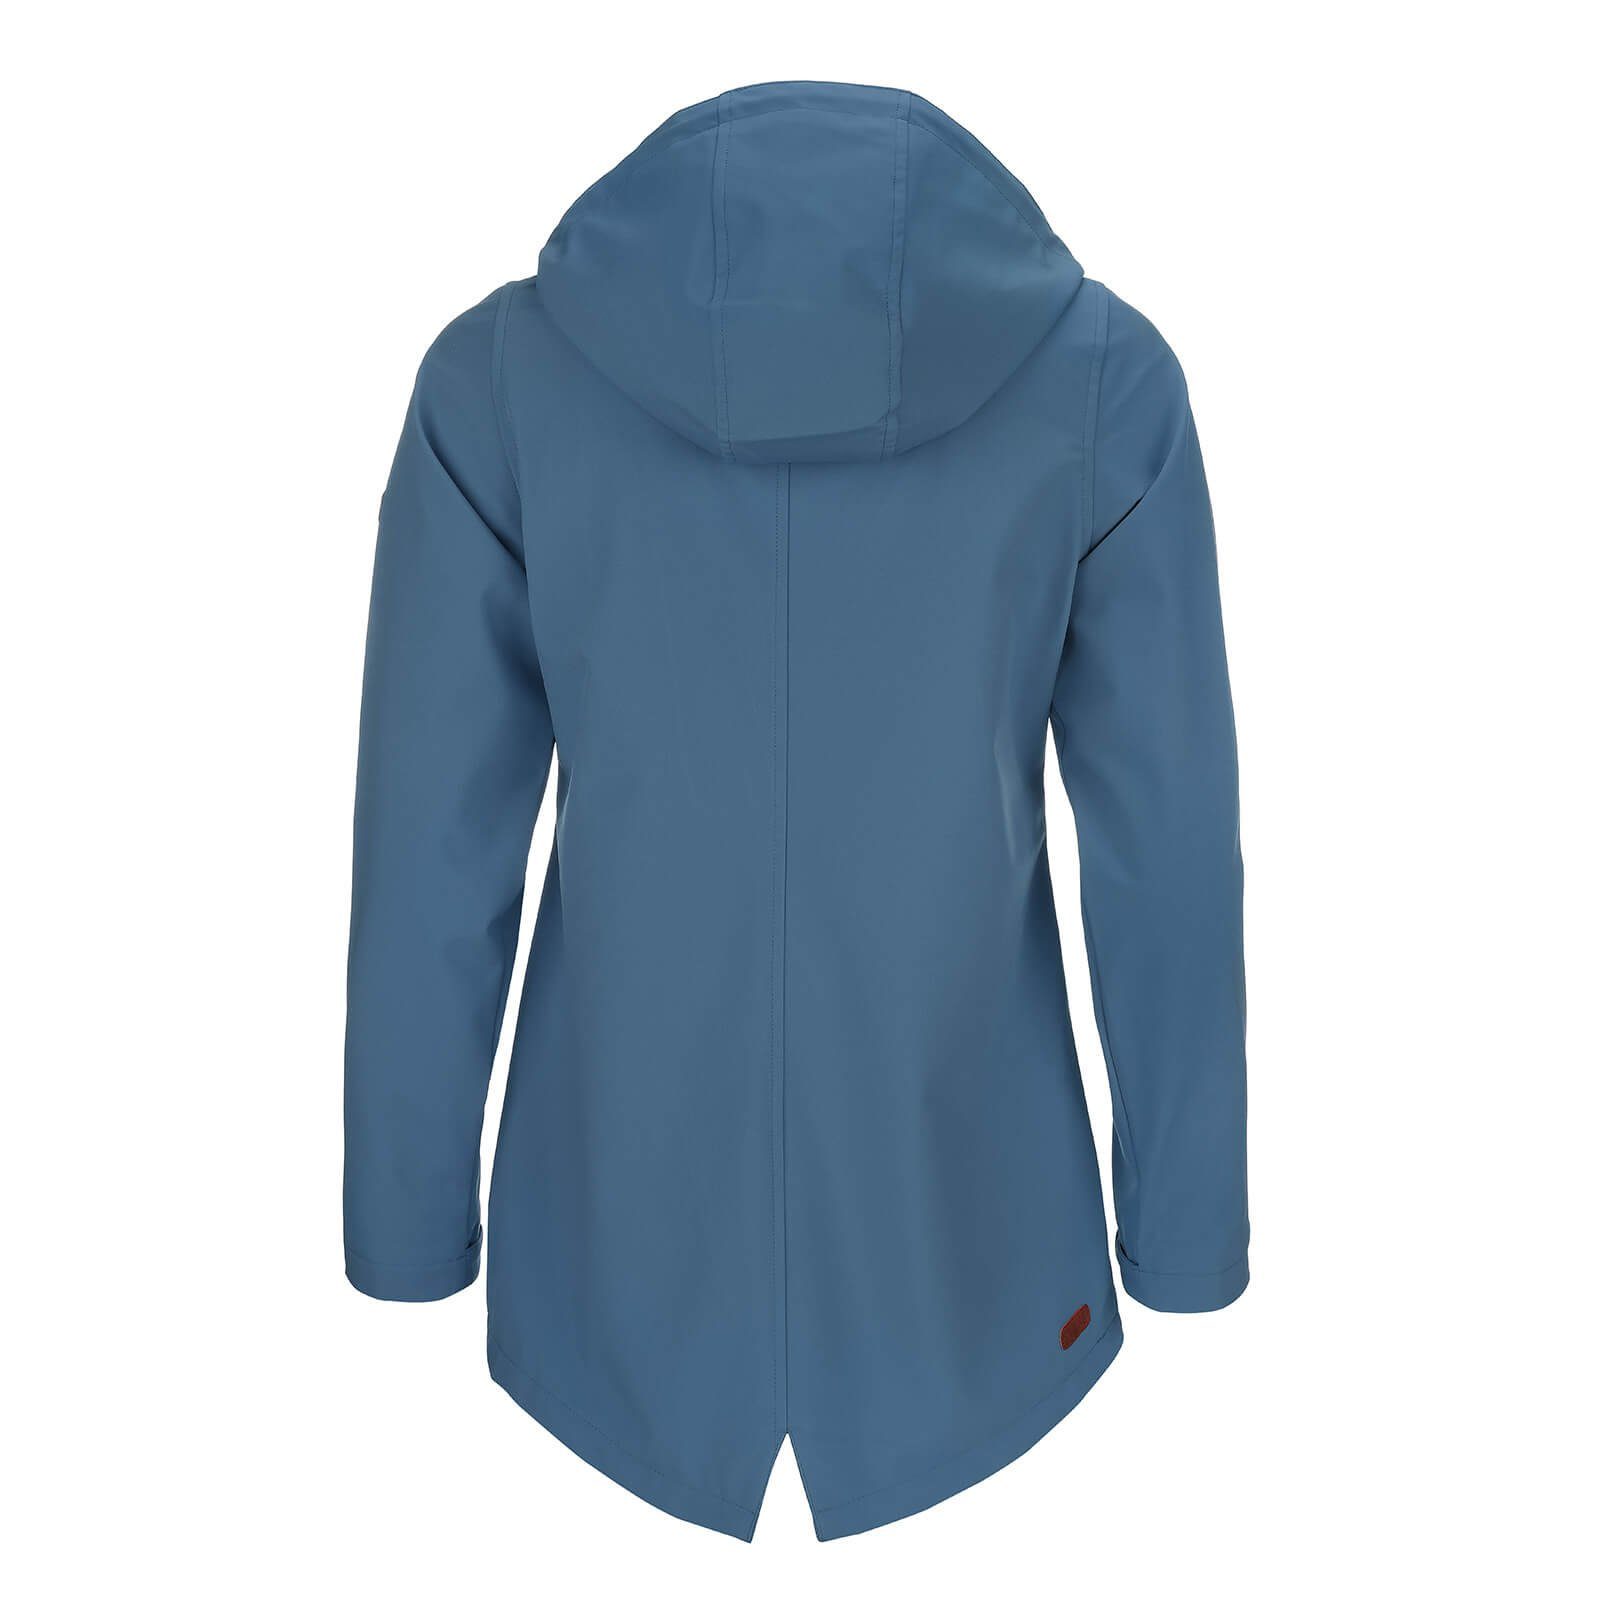 modAS Softshelljacke Damen Softshell-Mantel rauchblau - mit Kapuze Regenjacke Unifarben Jacke Outdoor